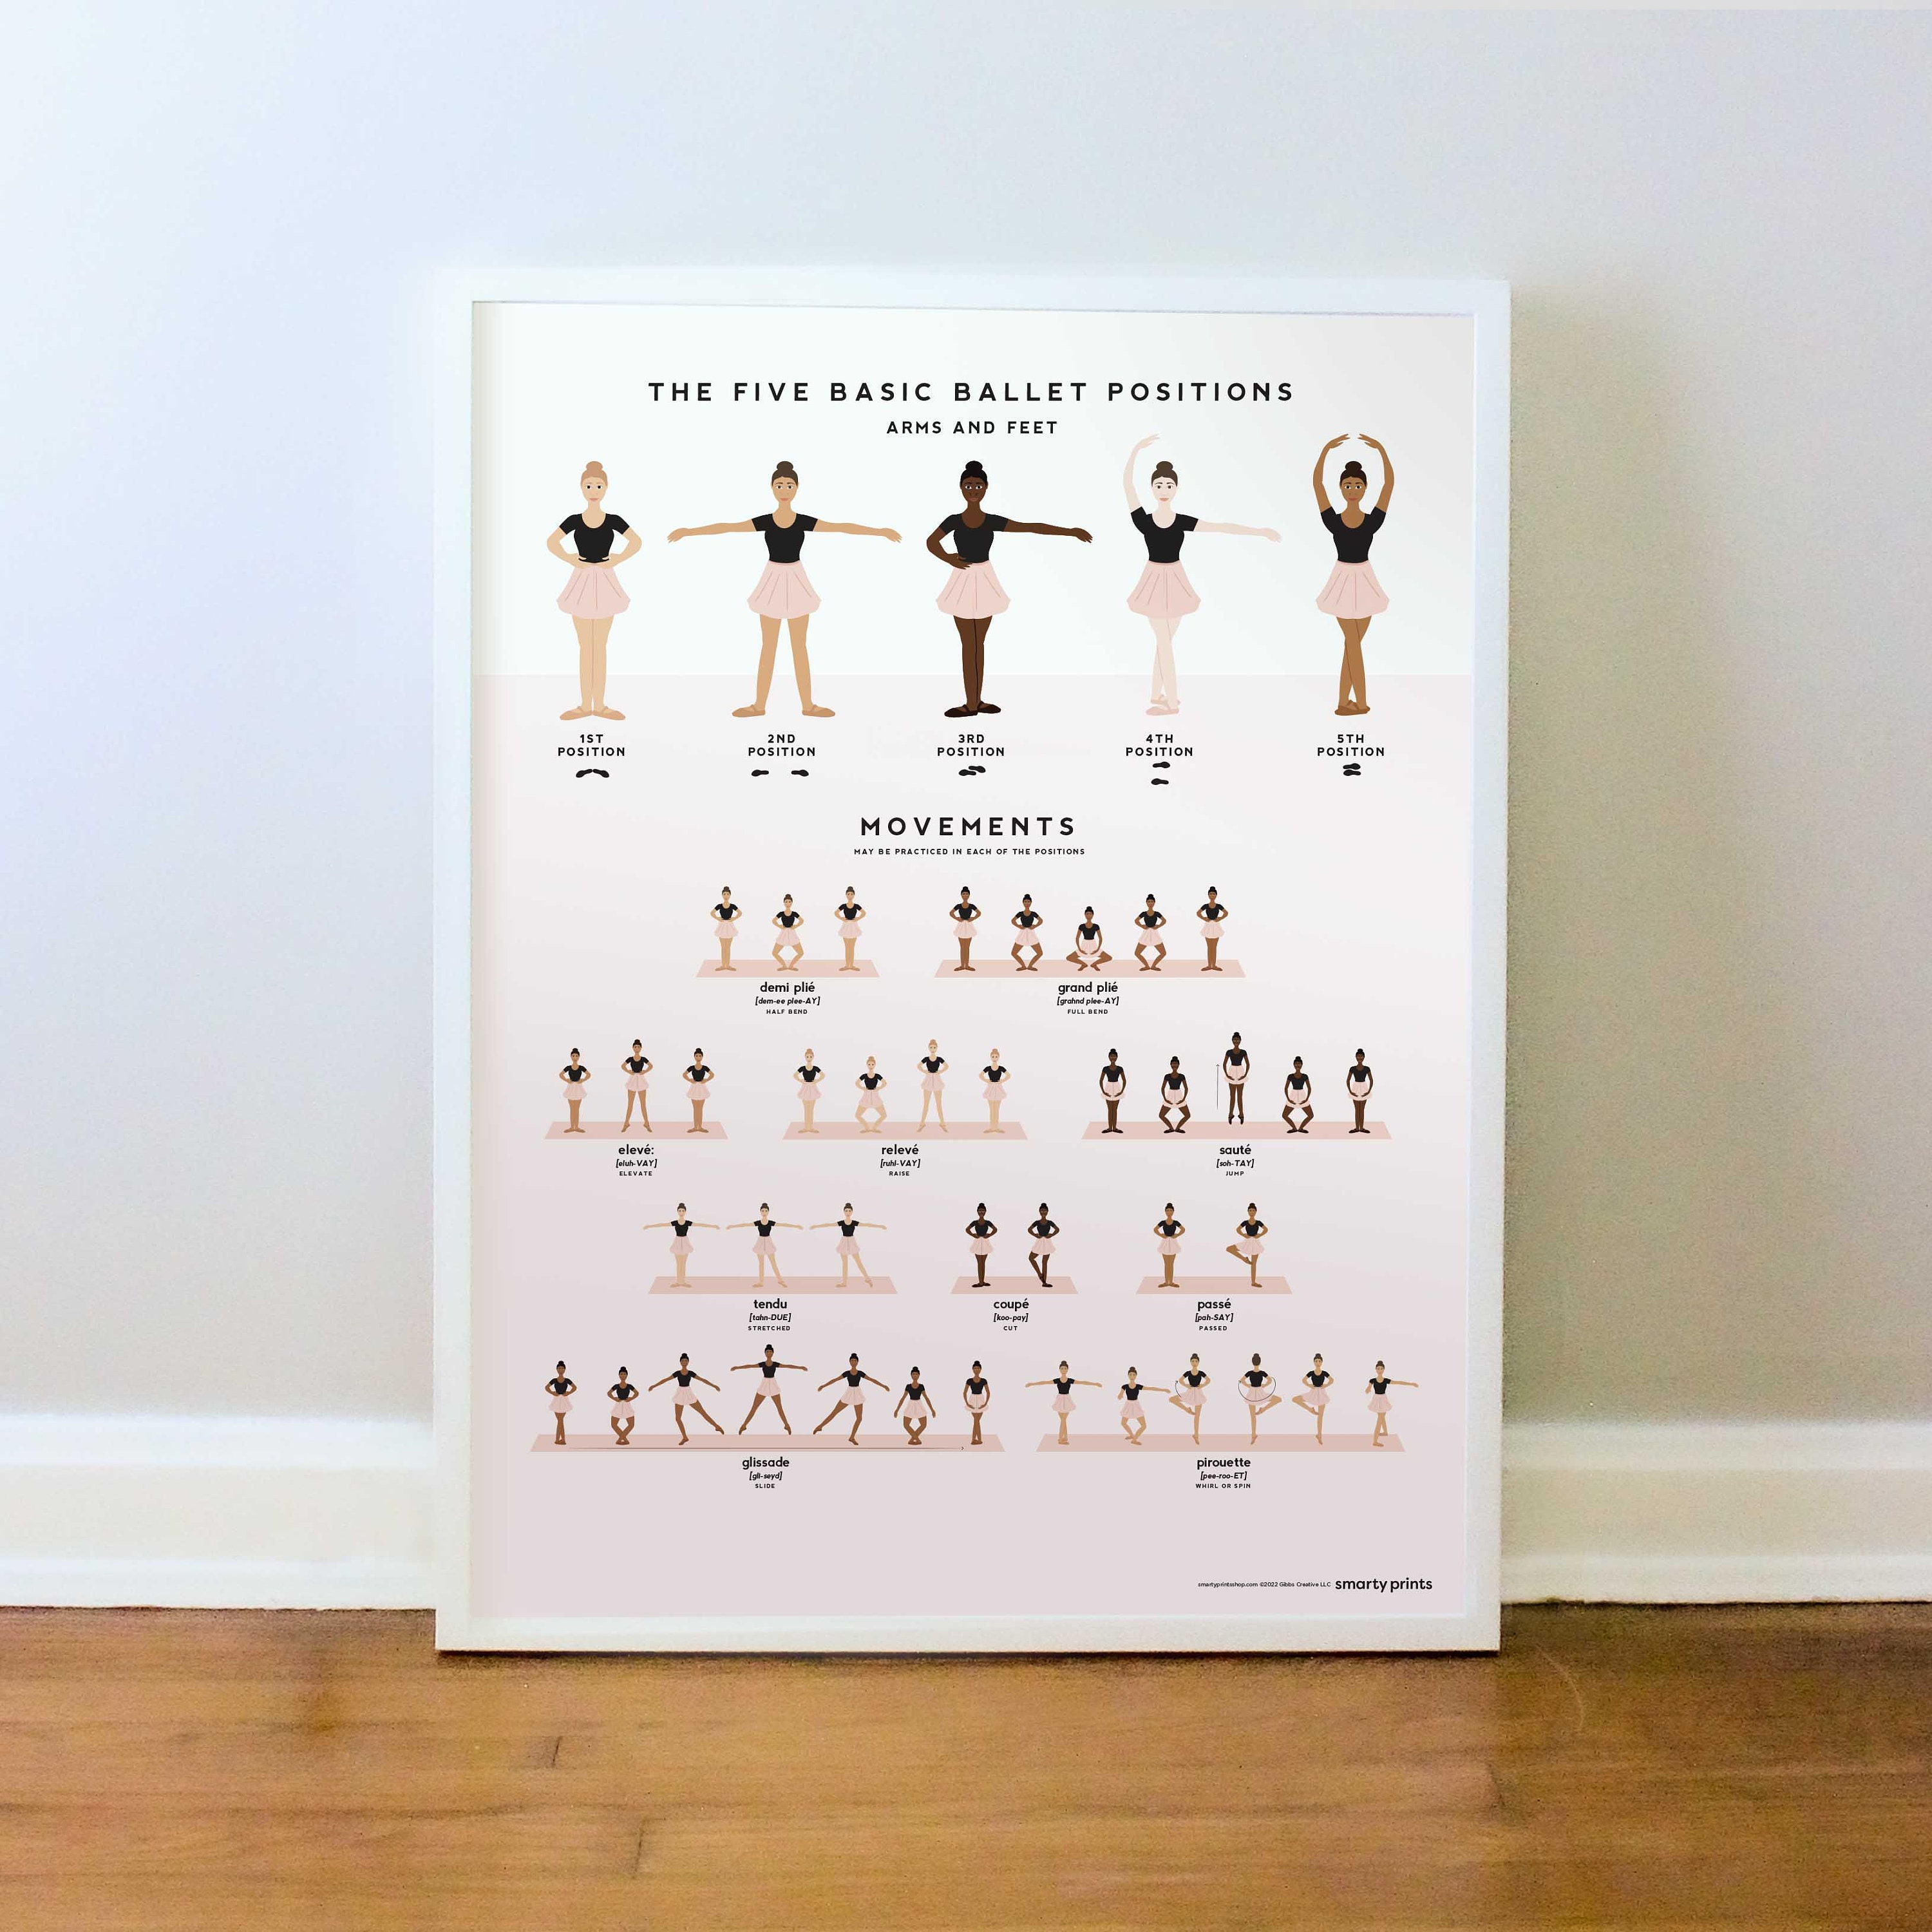 Dance Word Art Poster Board 11x14, 16x20, 20x30 Sizes Ballet